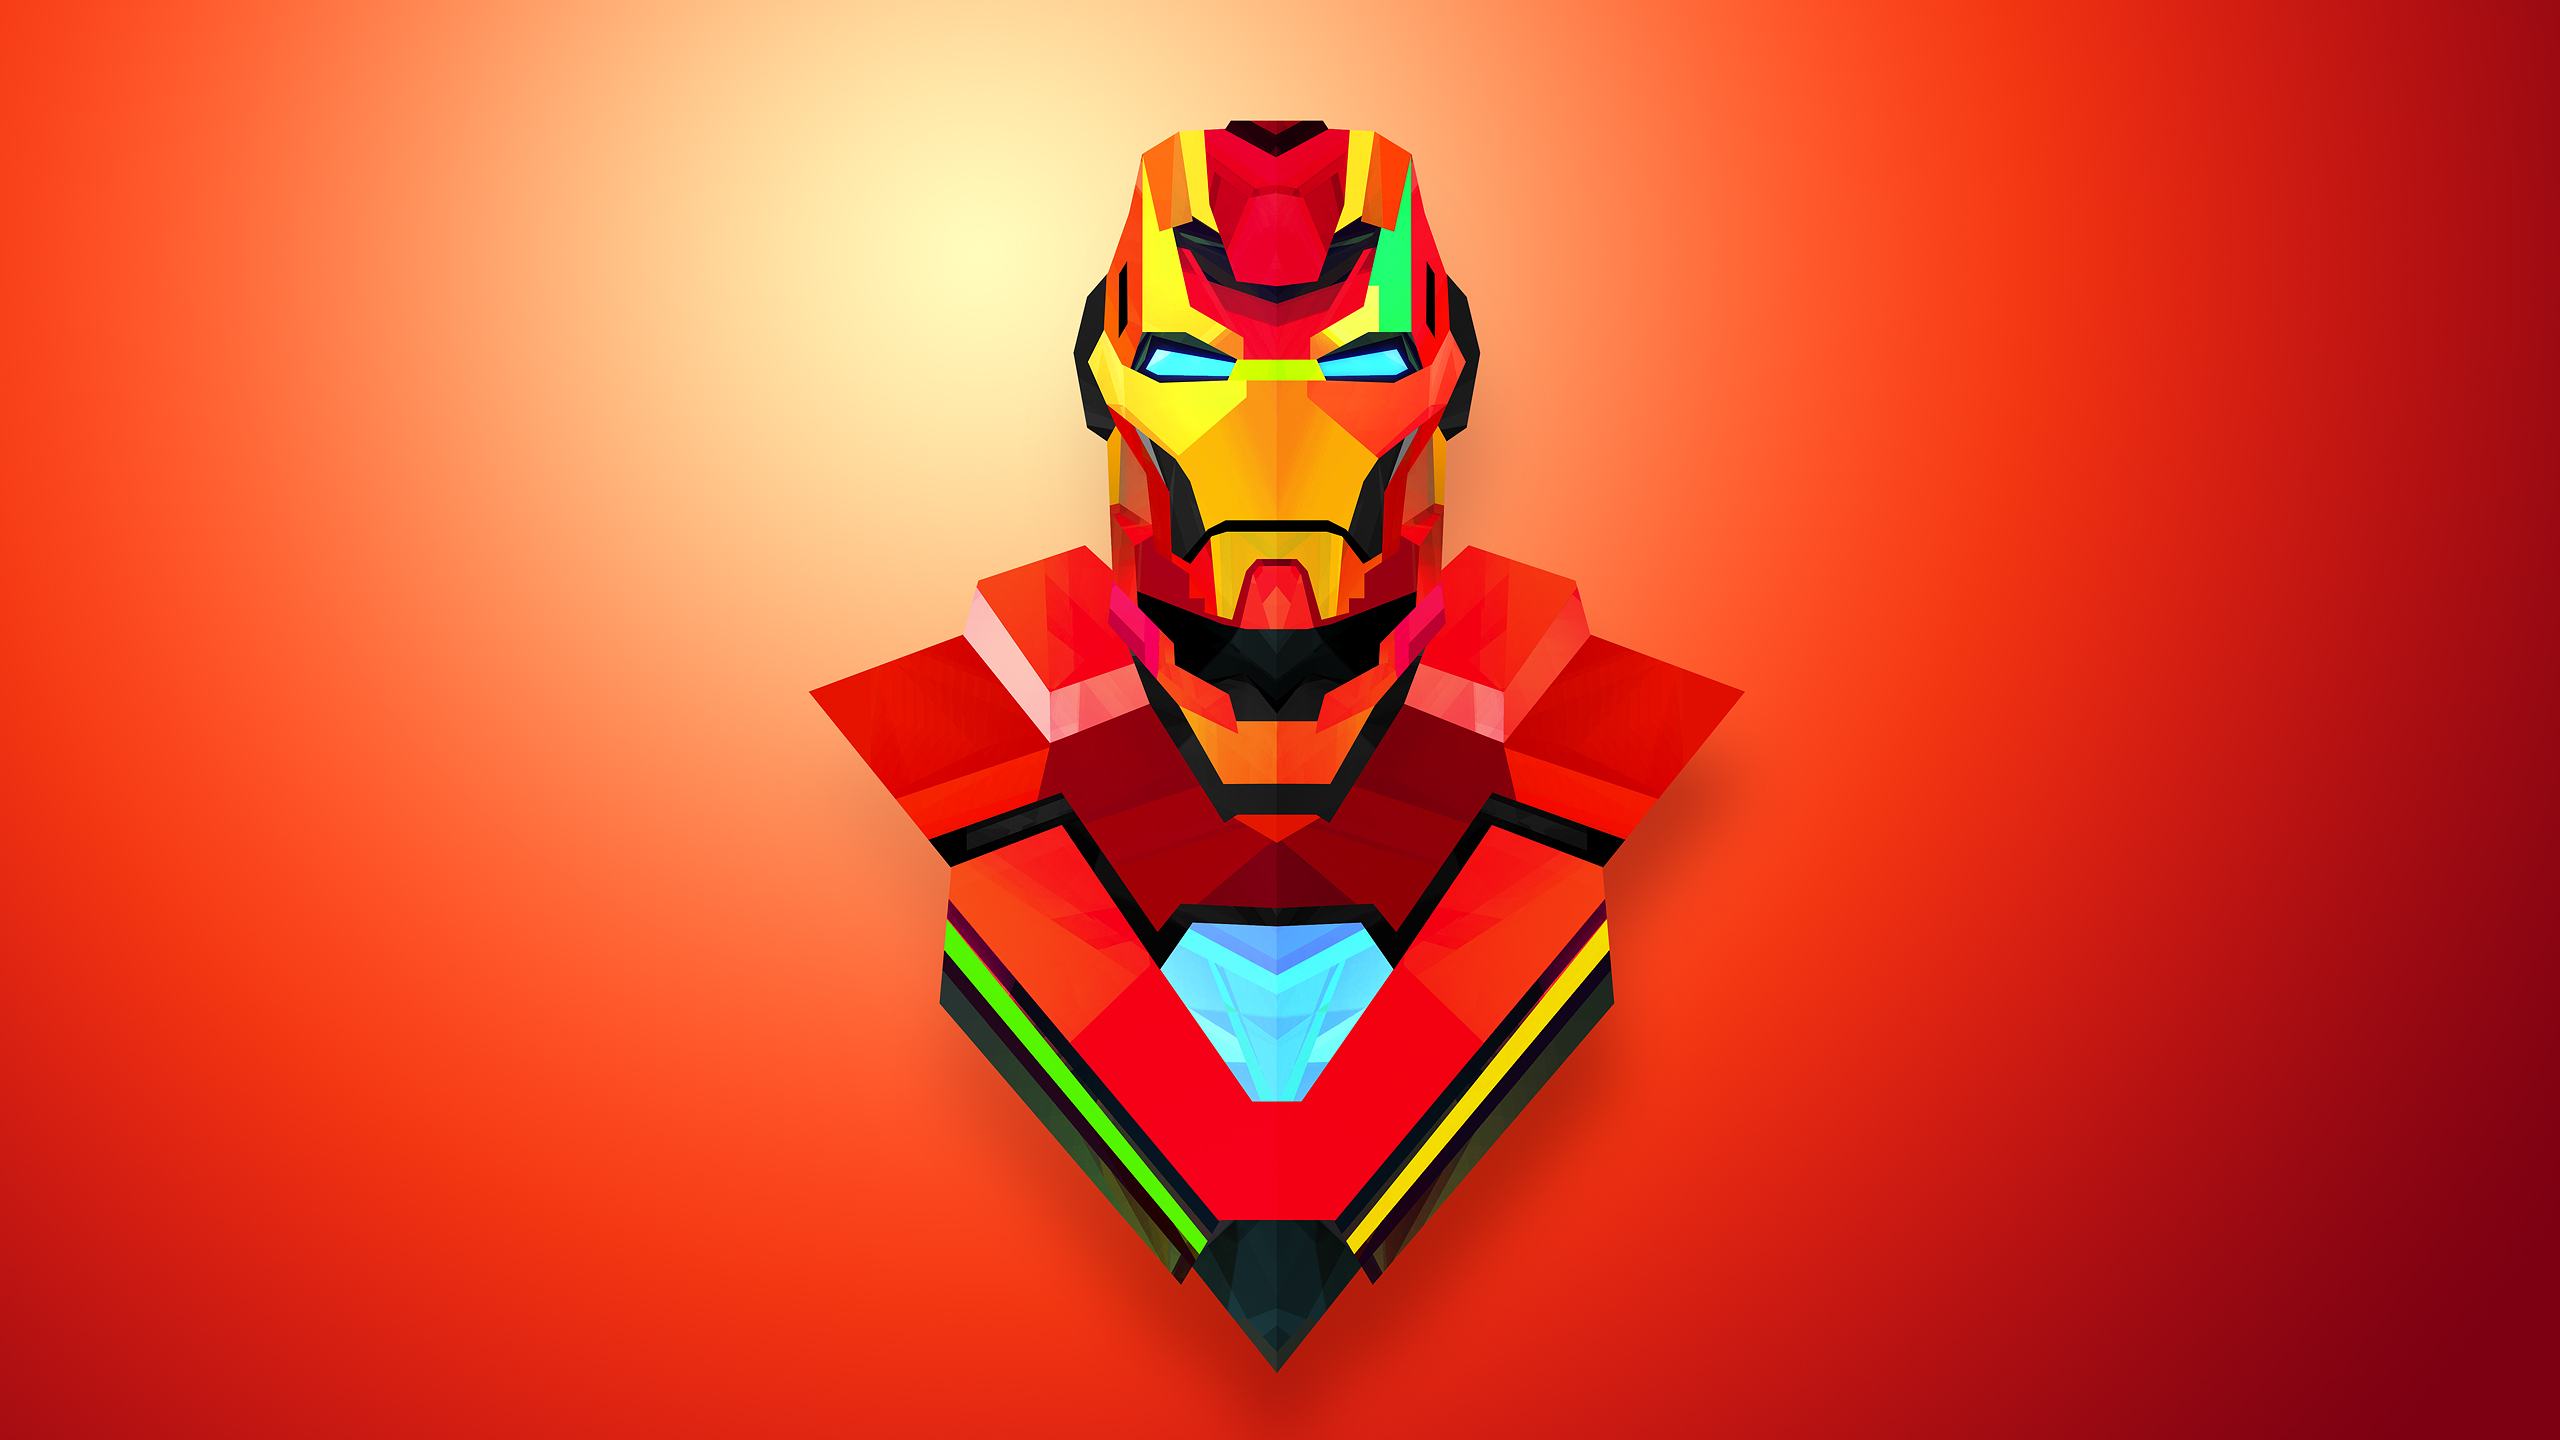 techsource wallpaper,red,fictional character,superhero,yellow,iron man